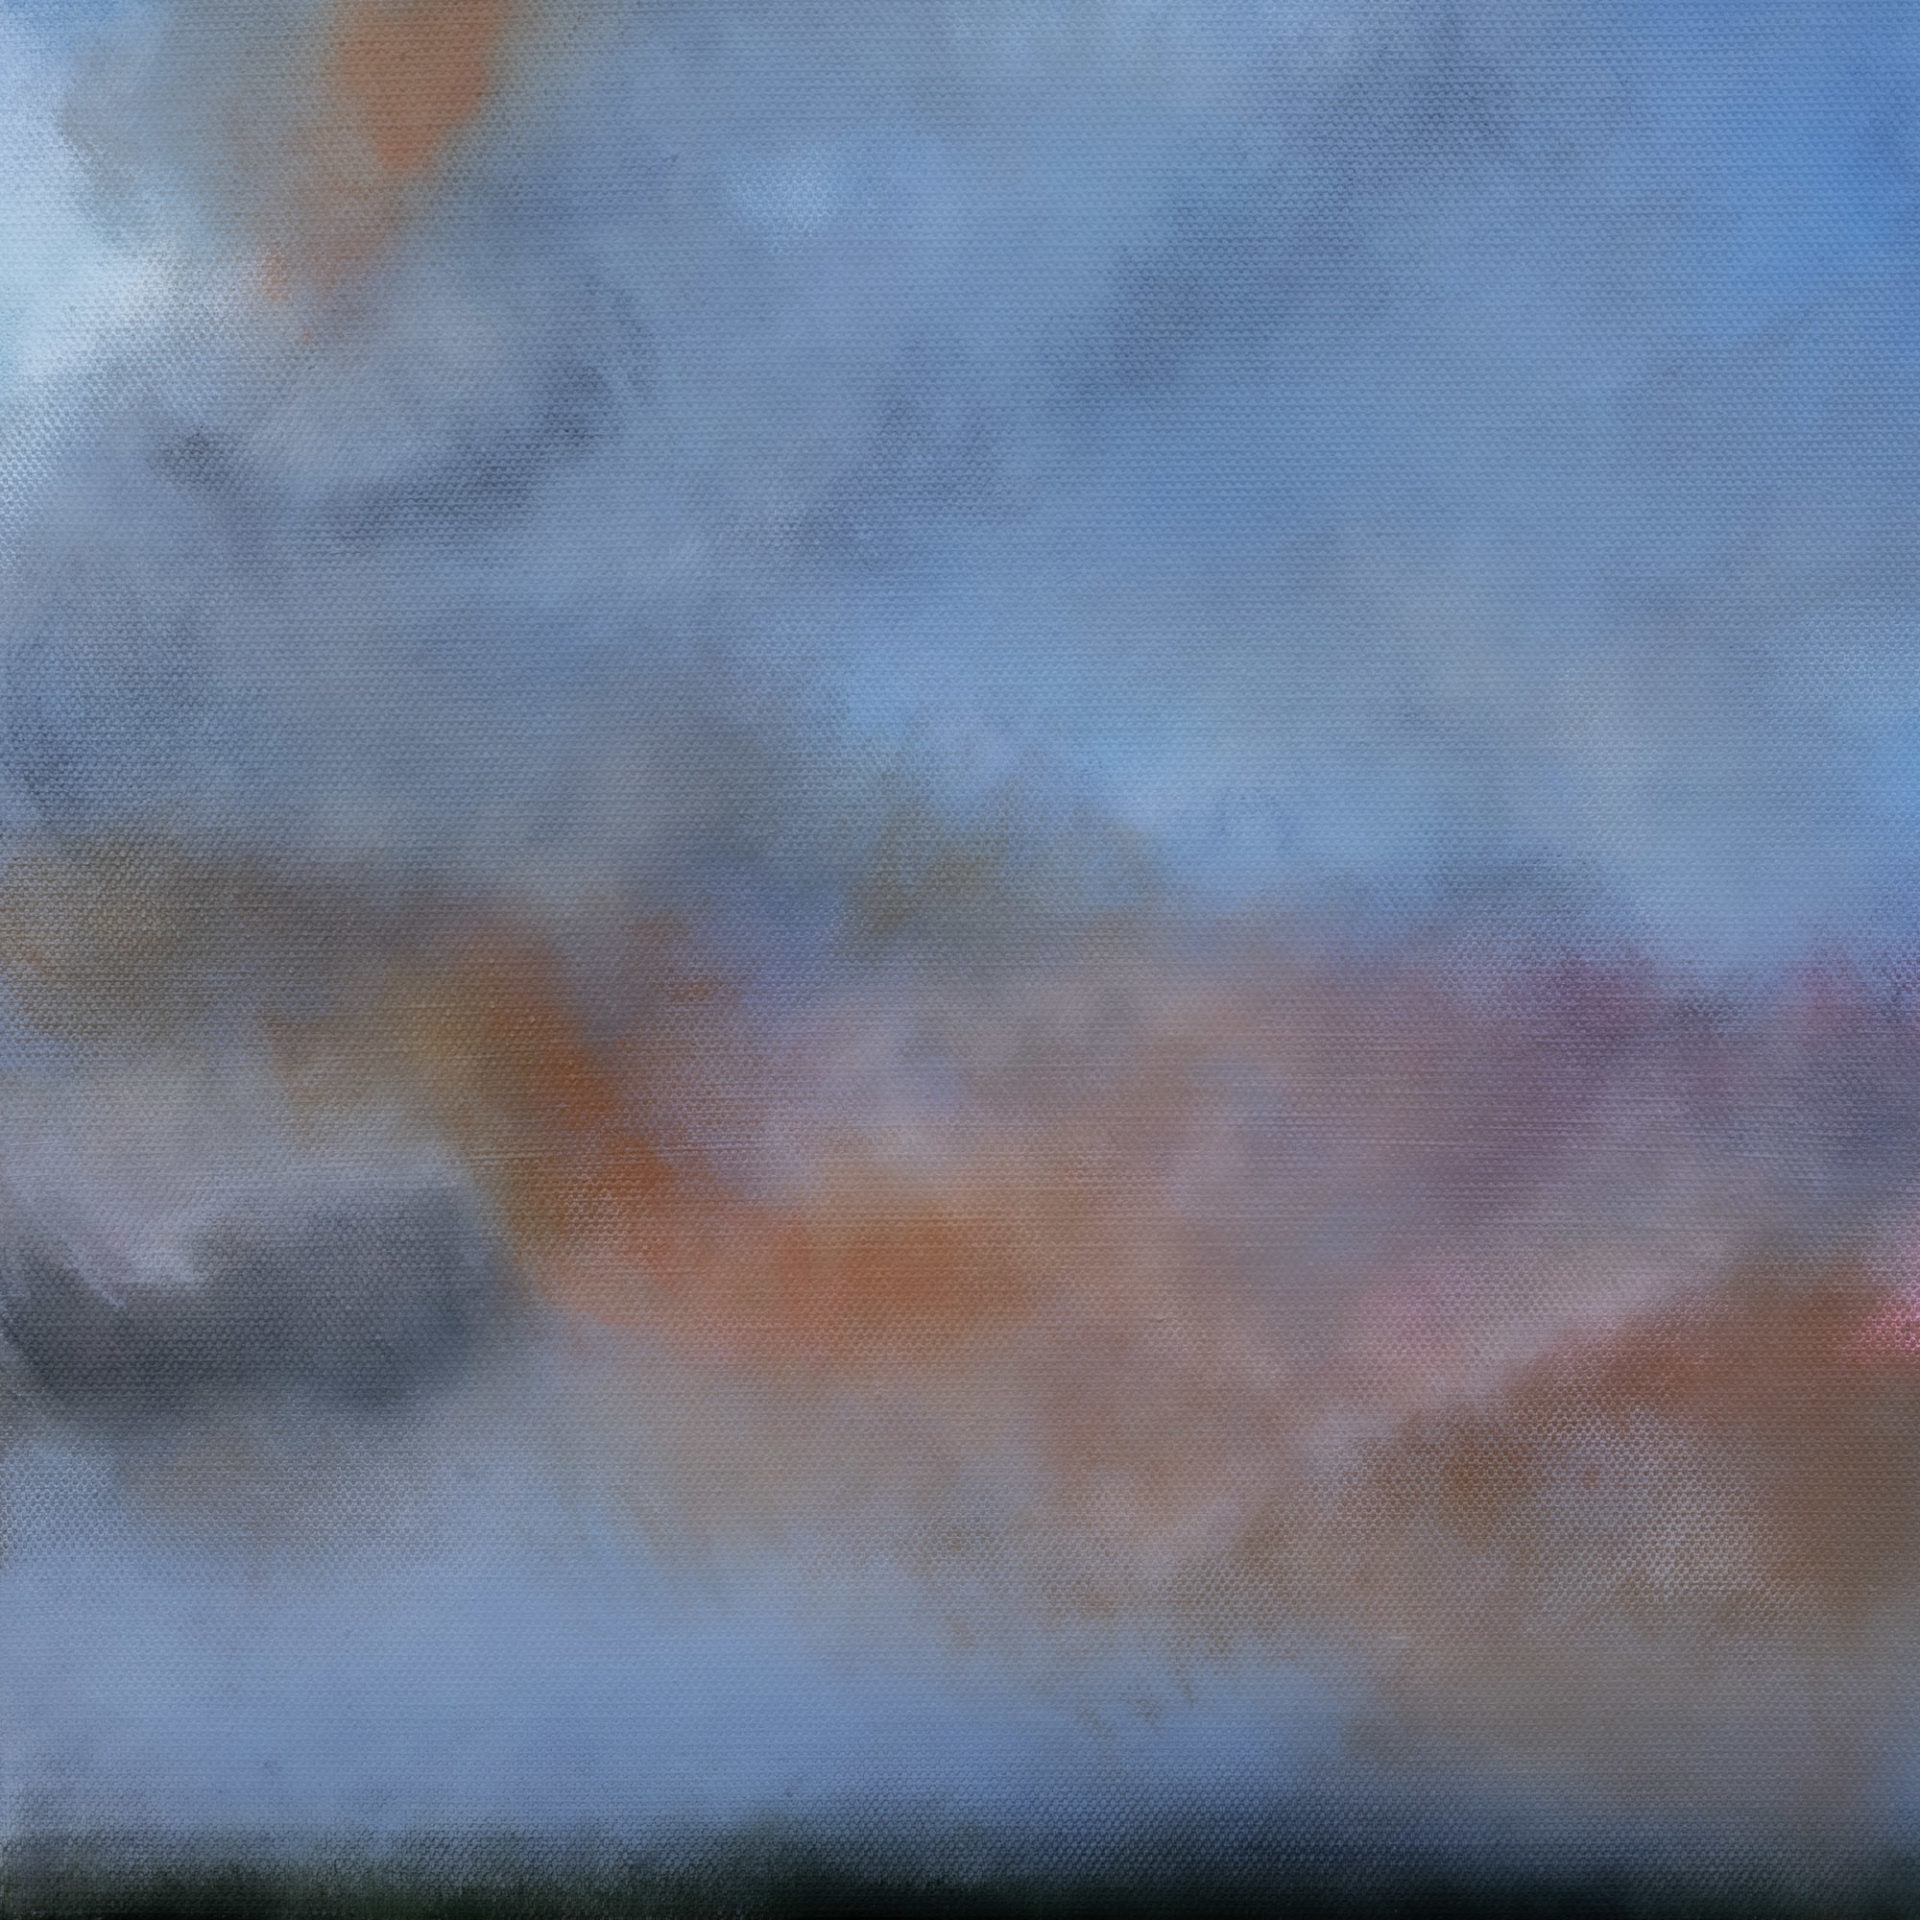 Cloudscape original art on canvas for sale Oxford